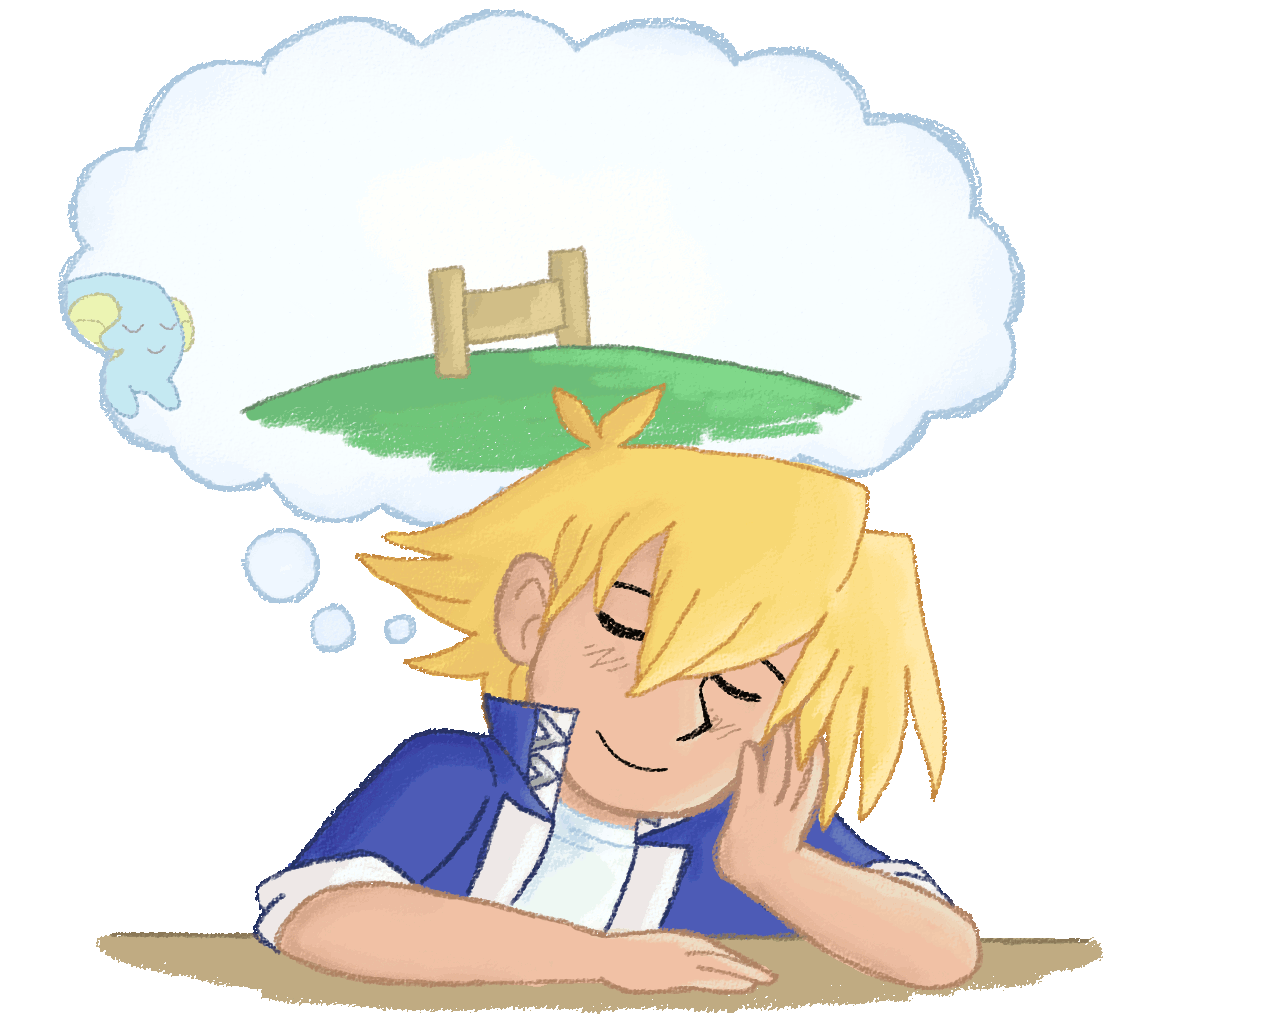 Dreaming fall asleep